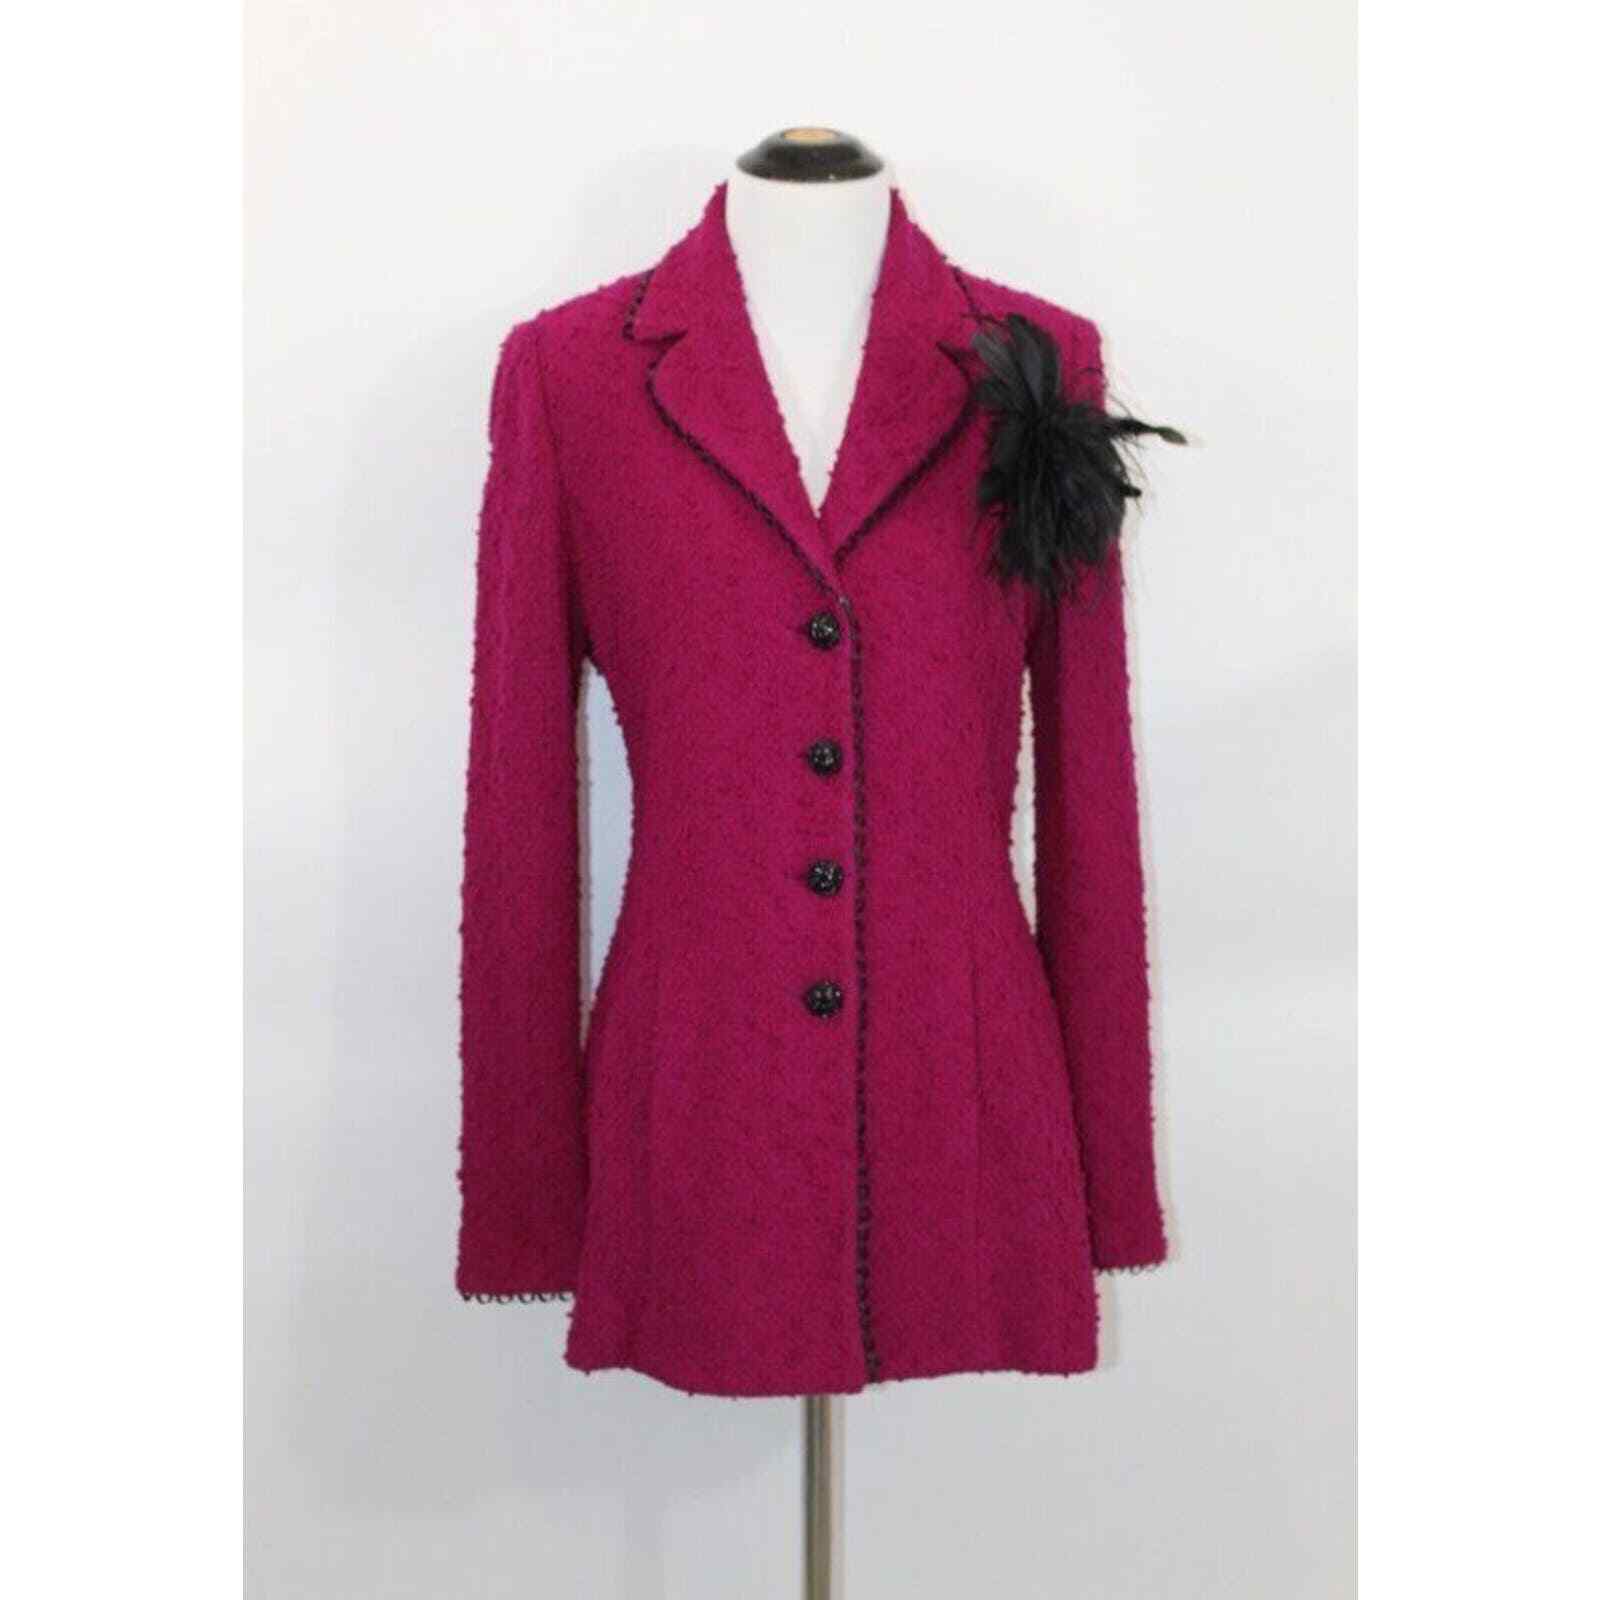 ST JOHN Collection Sz 4 Fuchsia Berry Textured Novelty Knit Jacket Cardigan